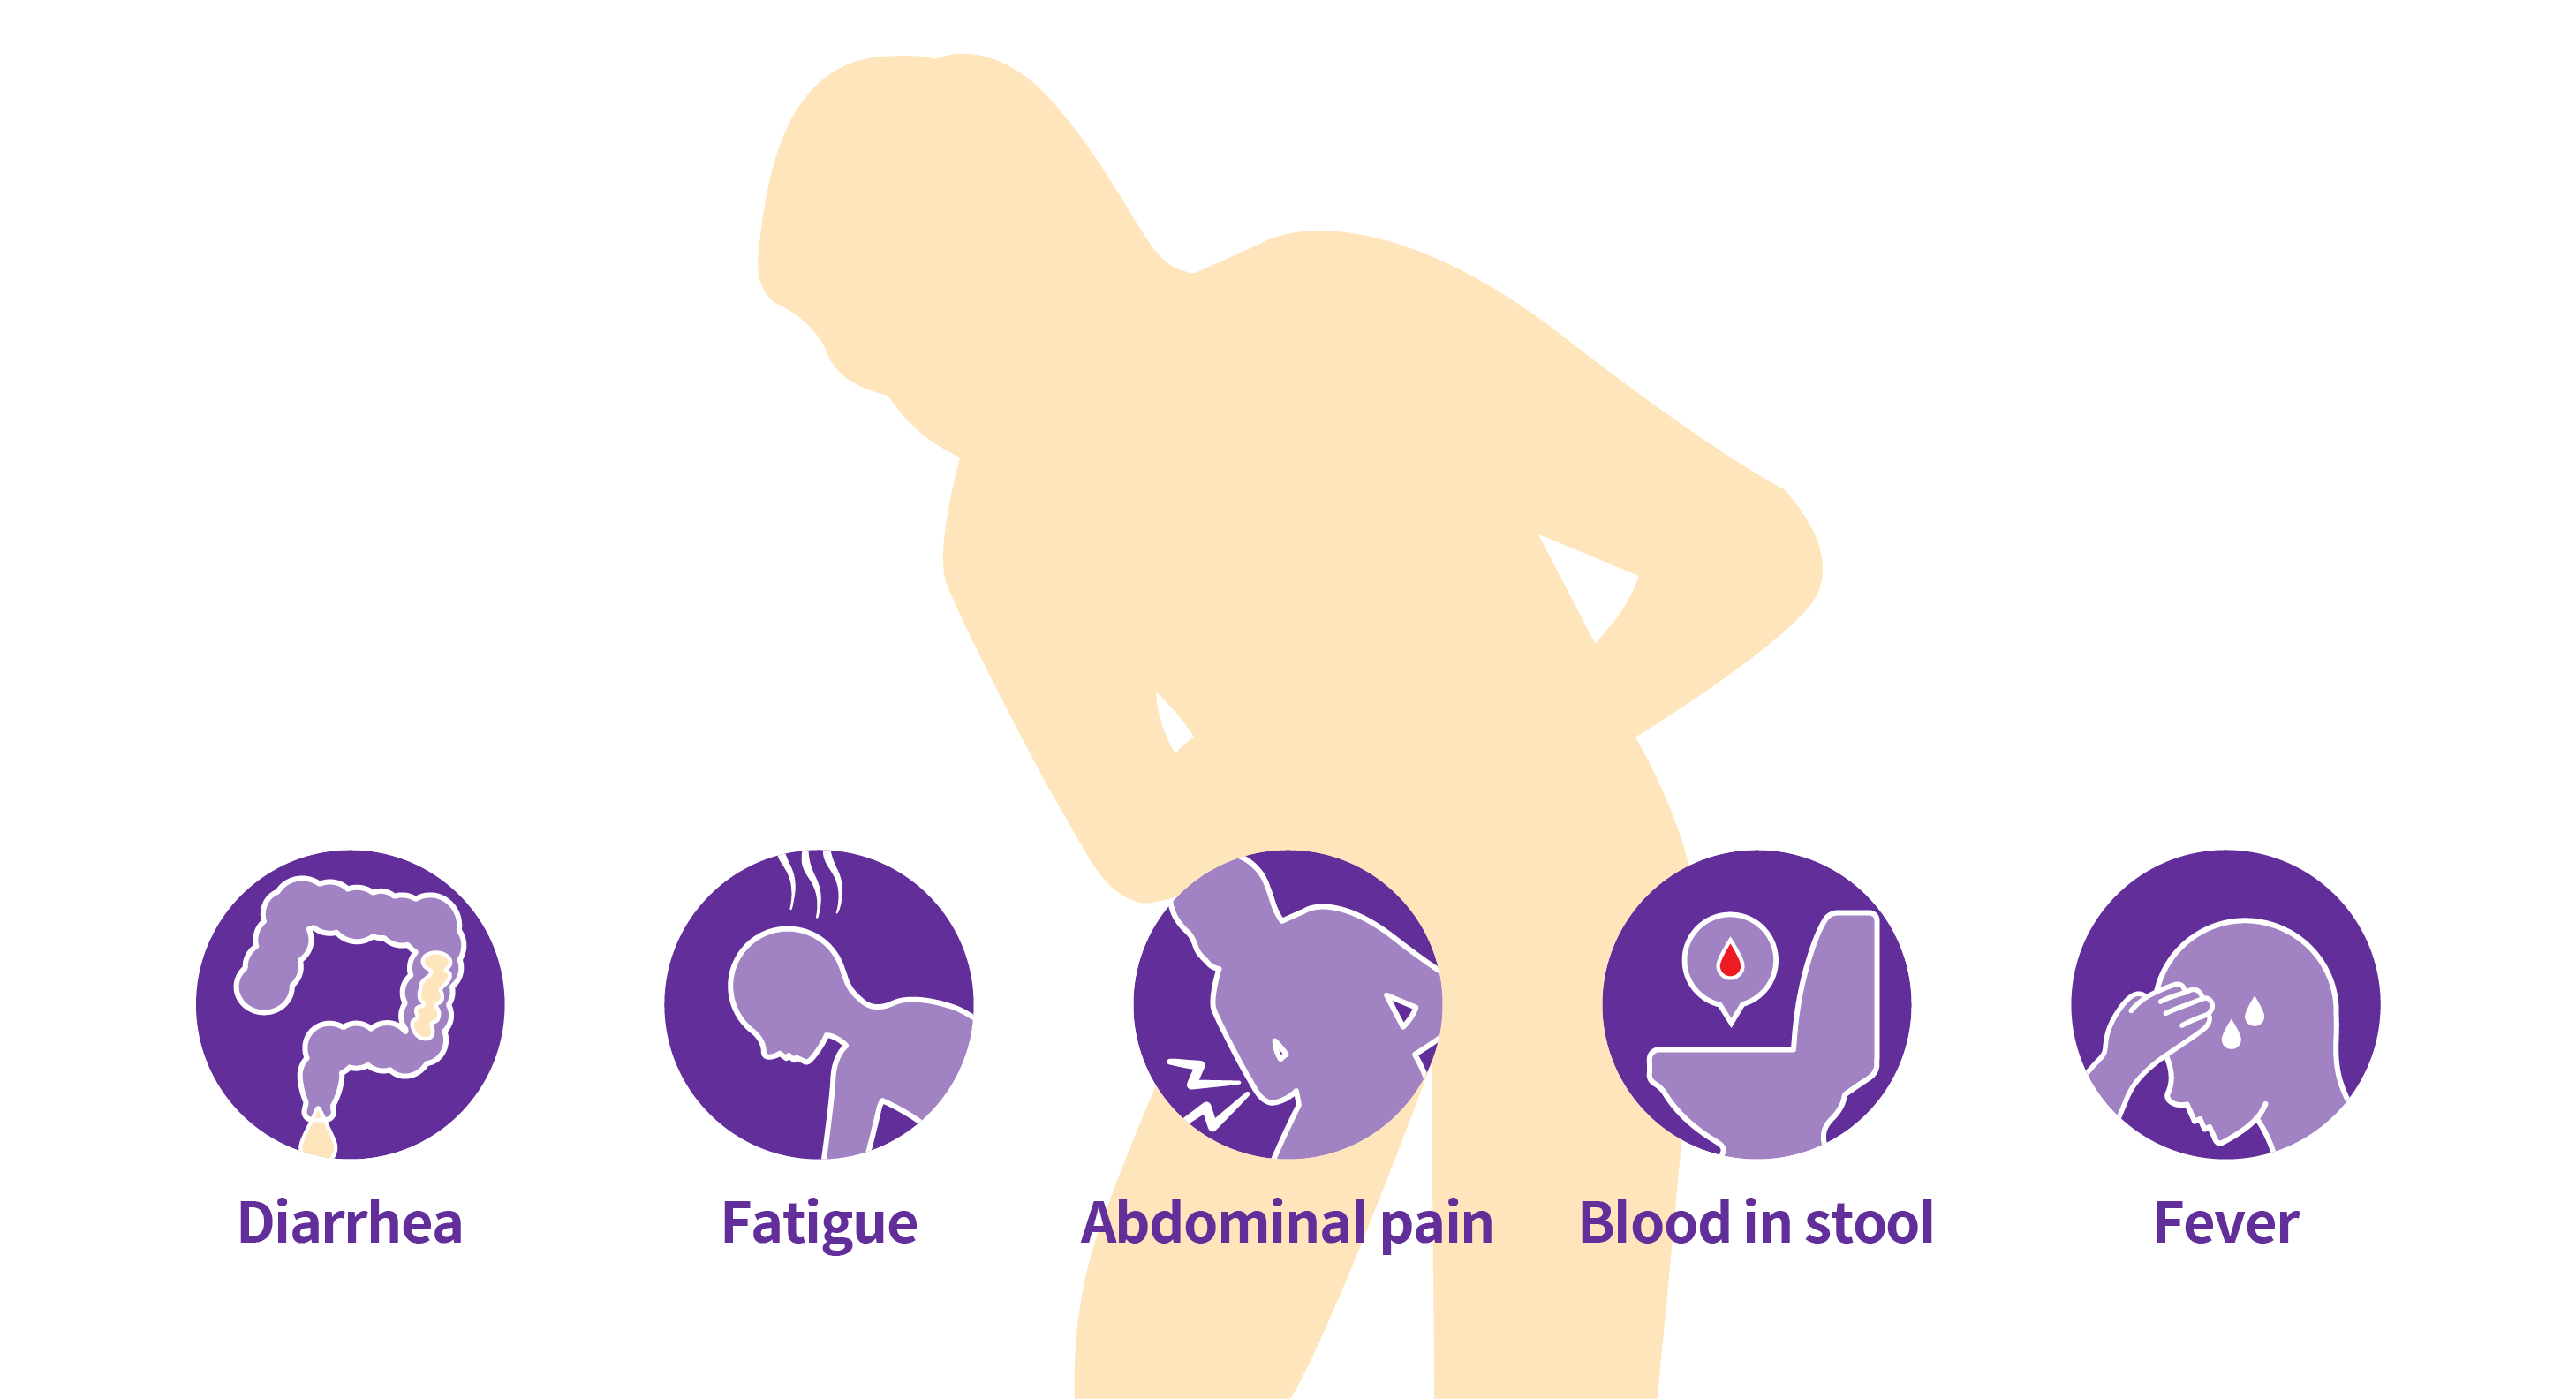 Five major symptoms of Crohn's disease: diarrhea, fatigue, abdominal pain, blood in stool, fever